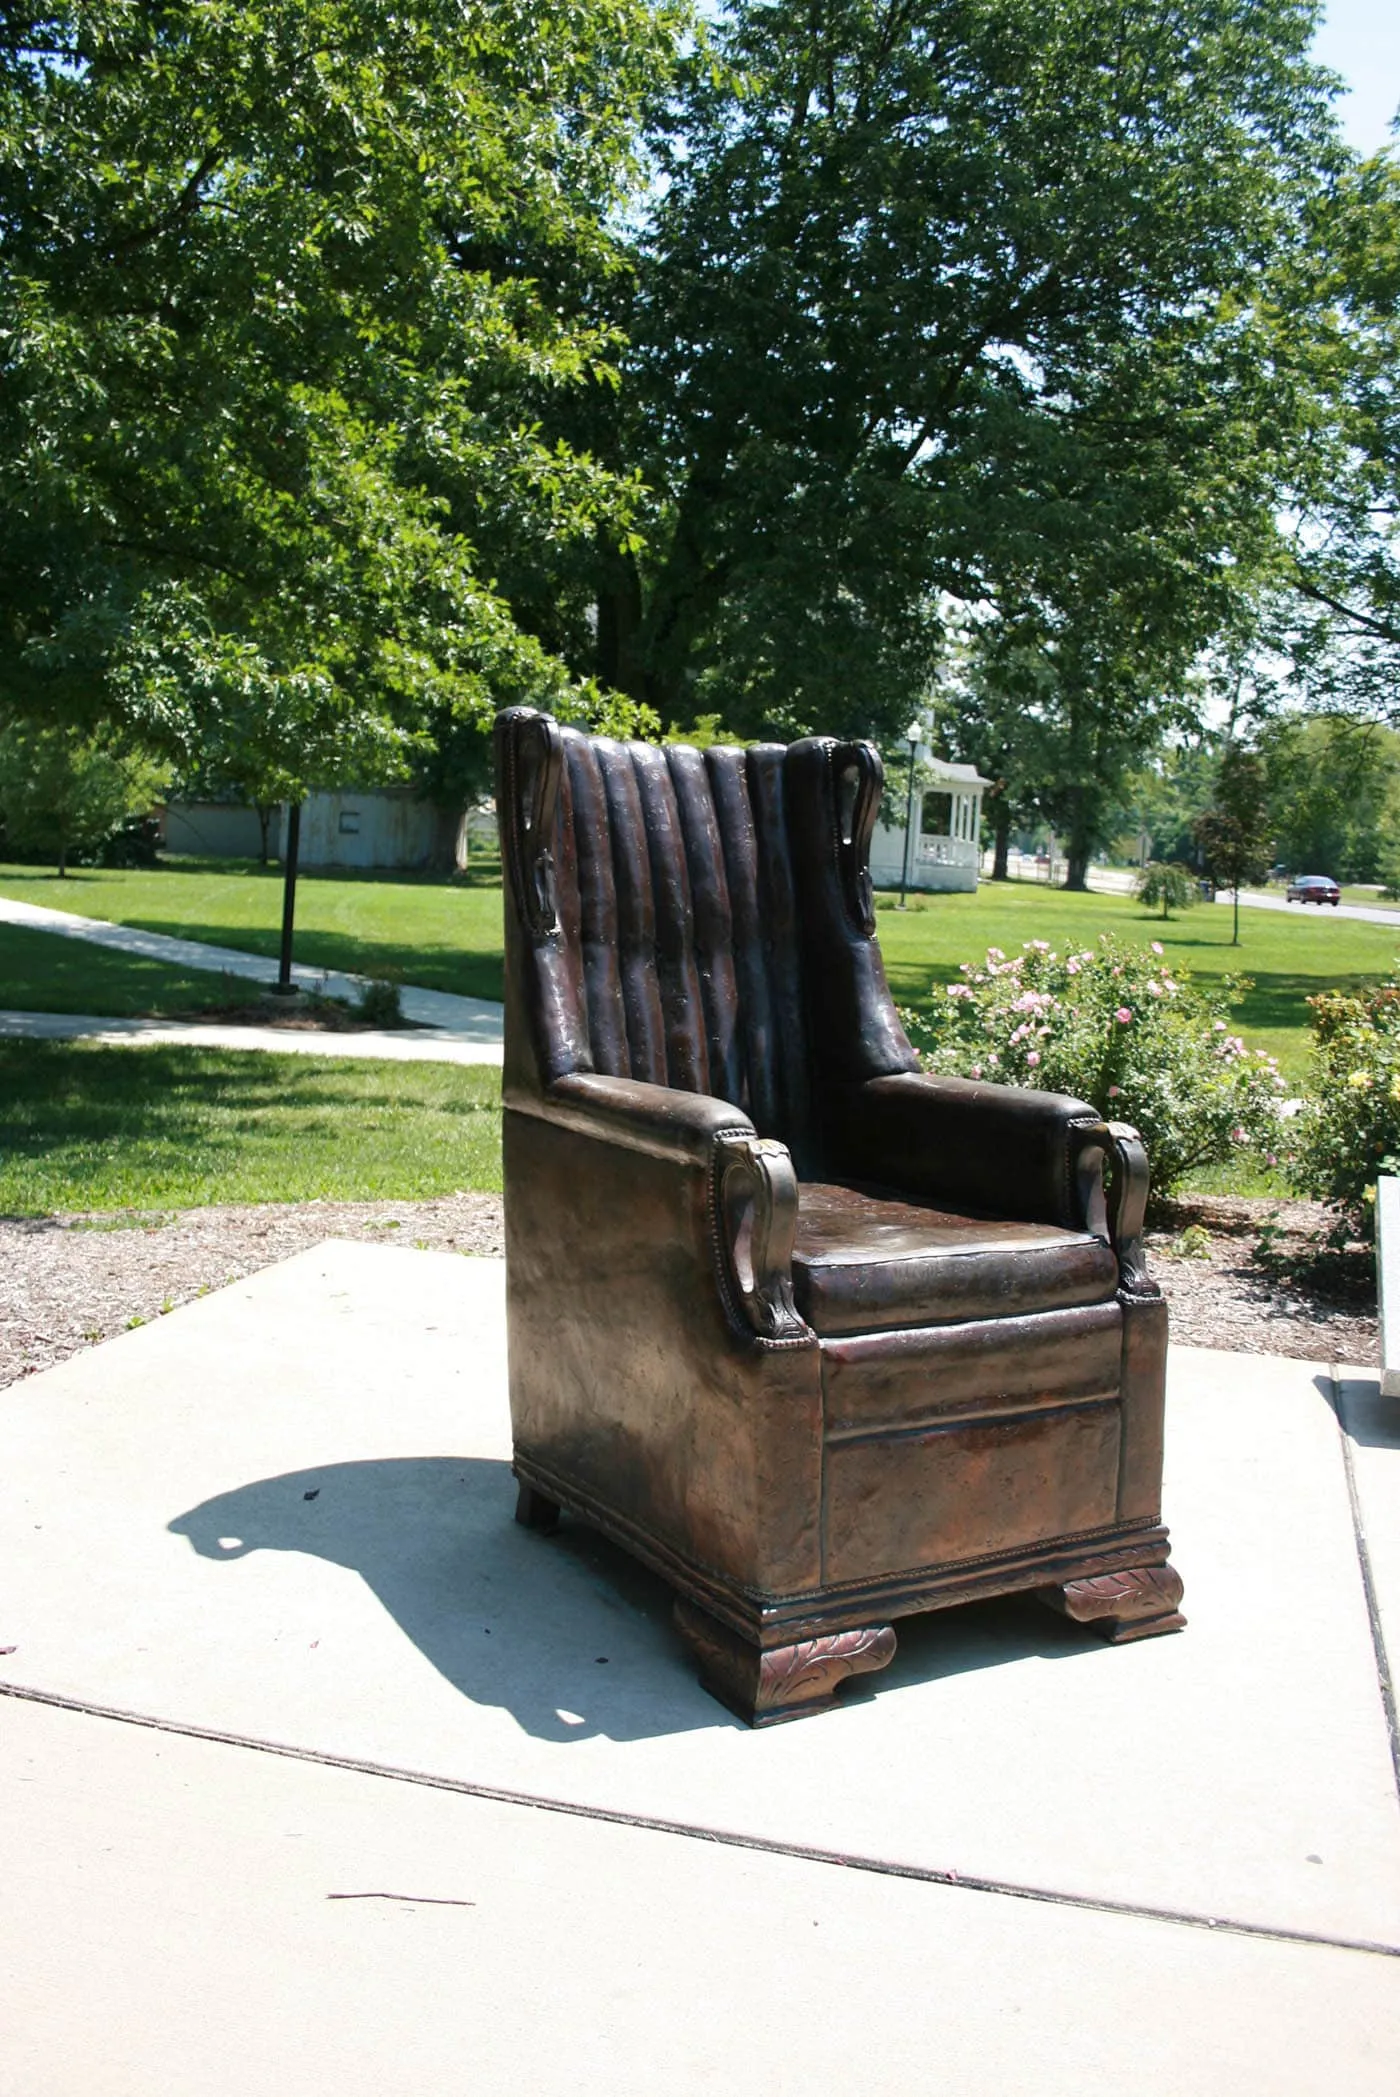 Replica of Robert Wadlow's chair in Alton, Illinois. Robert Wadlow was the World's Tallest Man.